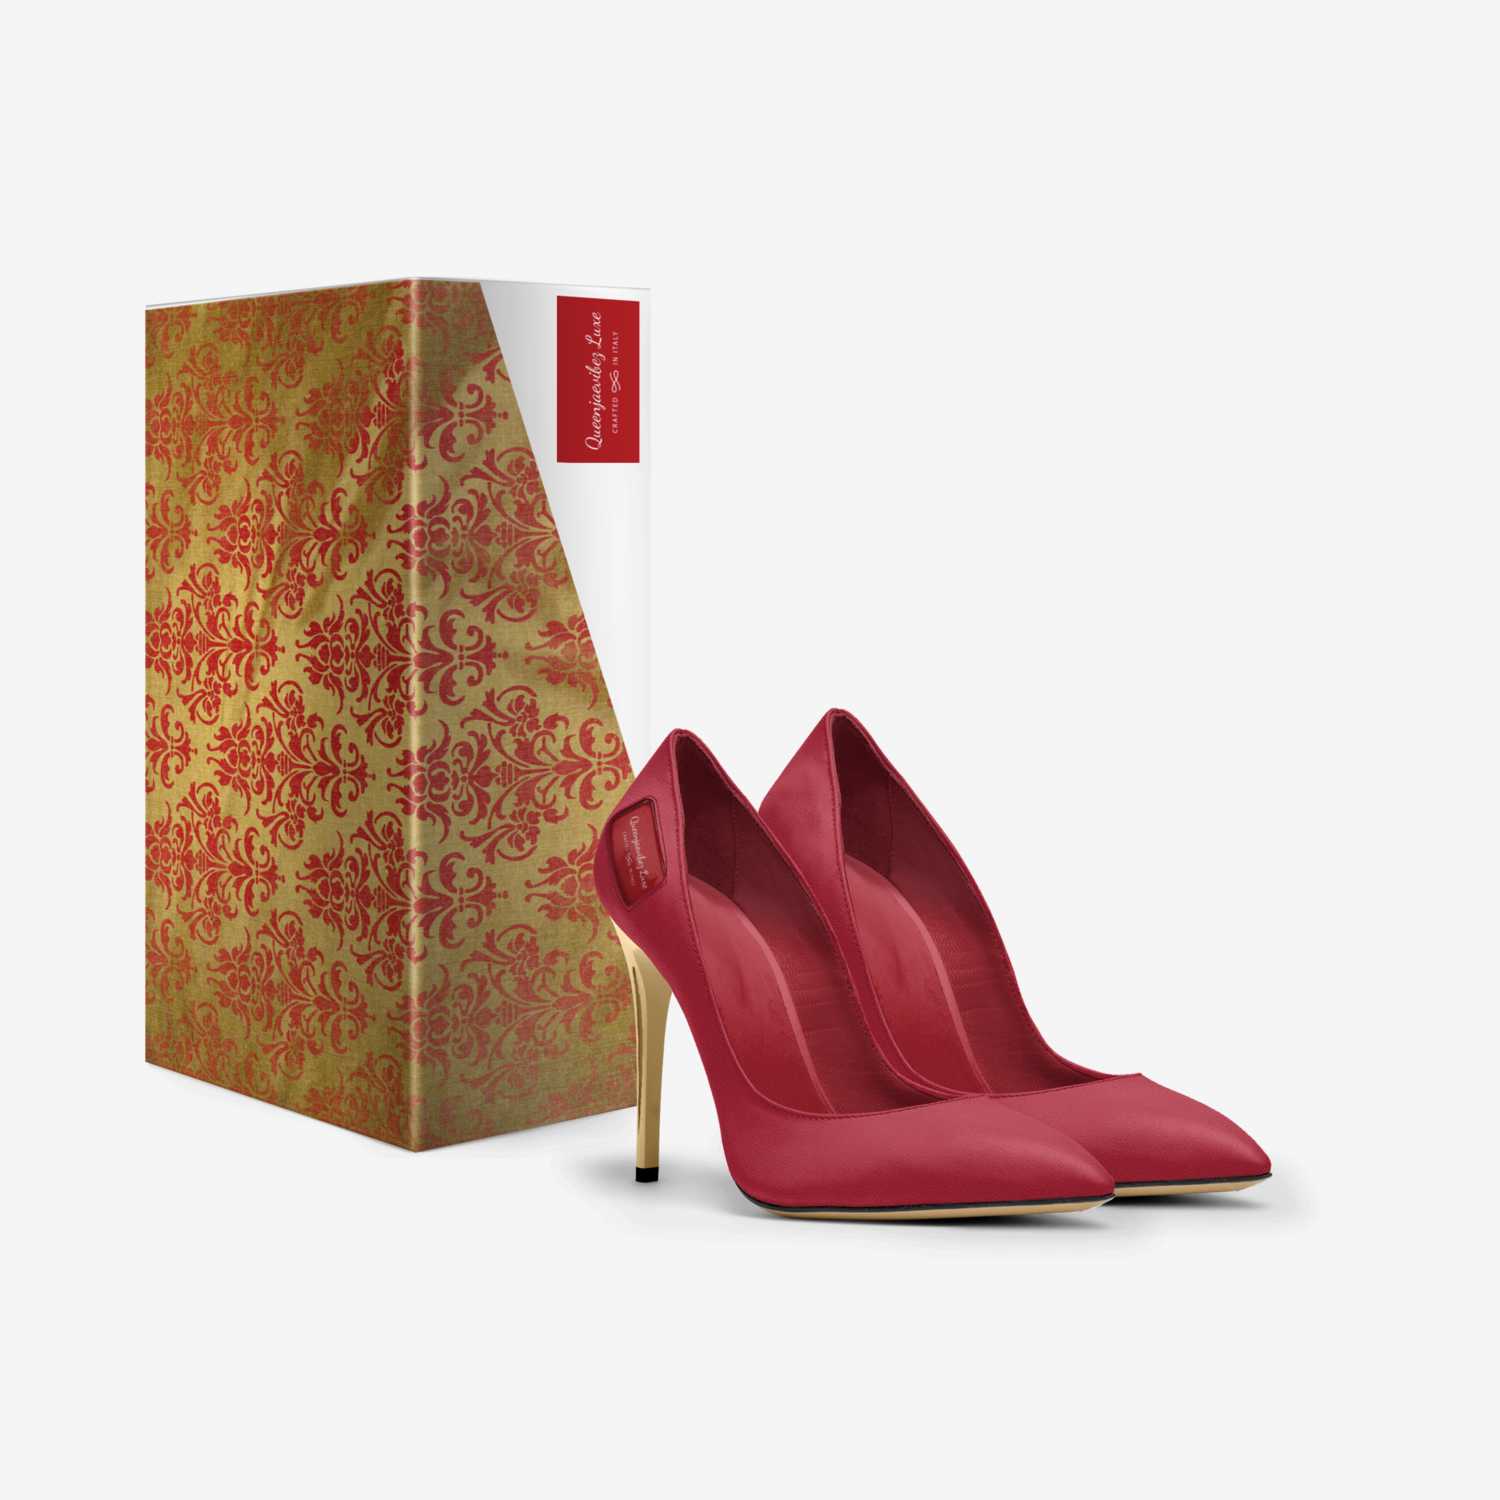 Royal Palace custom made in Italy shoes by Jocelyn Joe | Box view